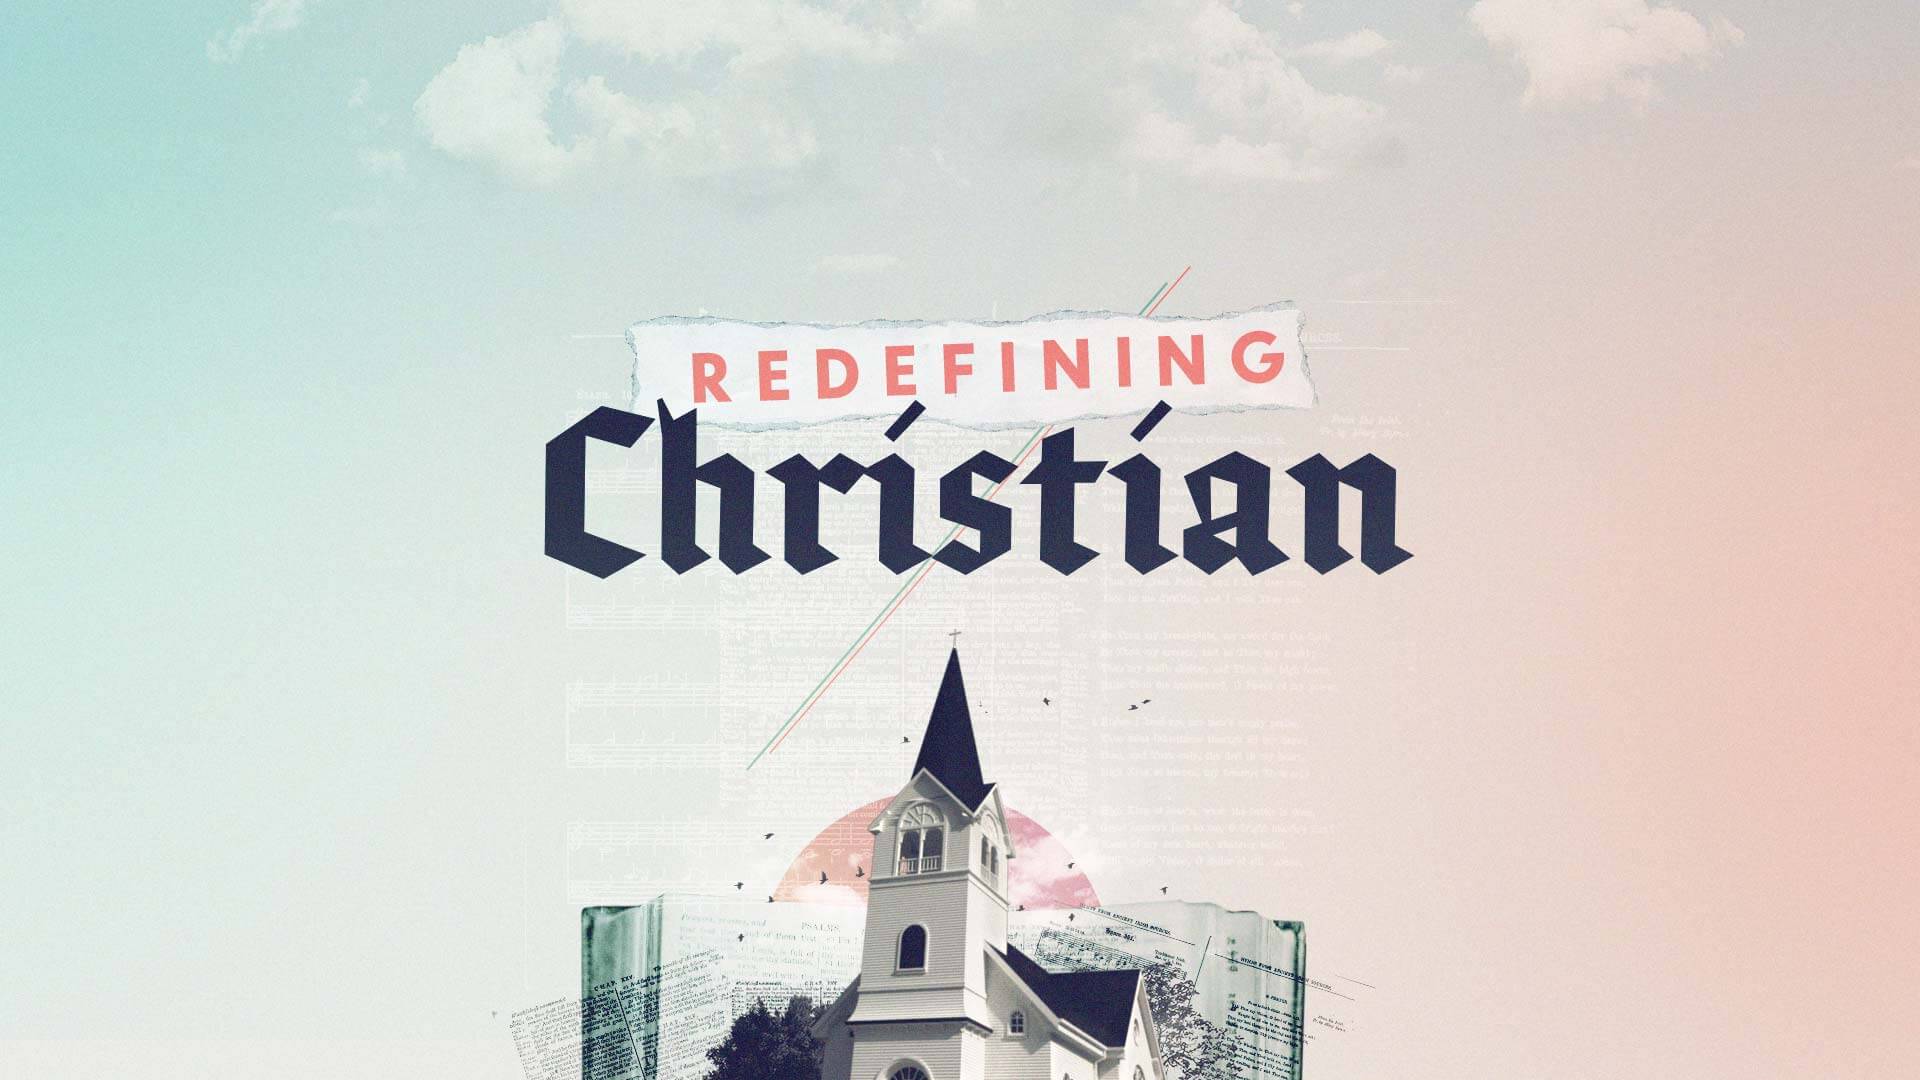 Redefining Christian